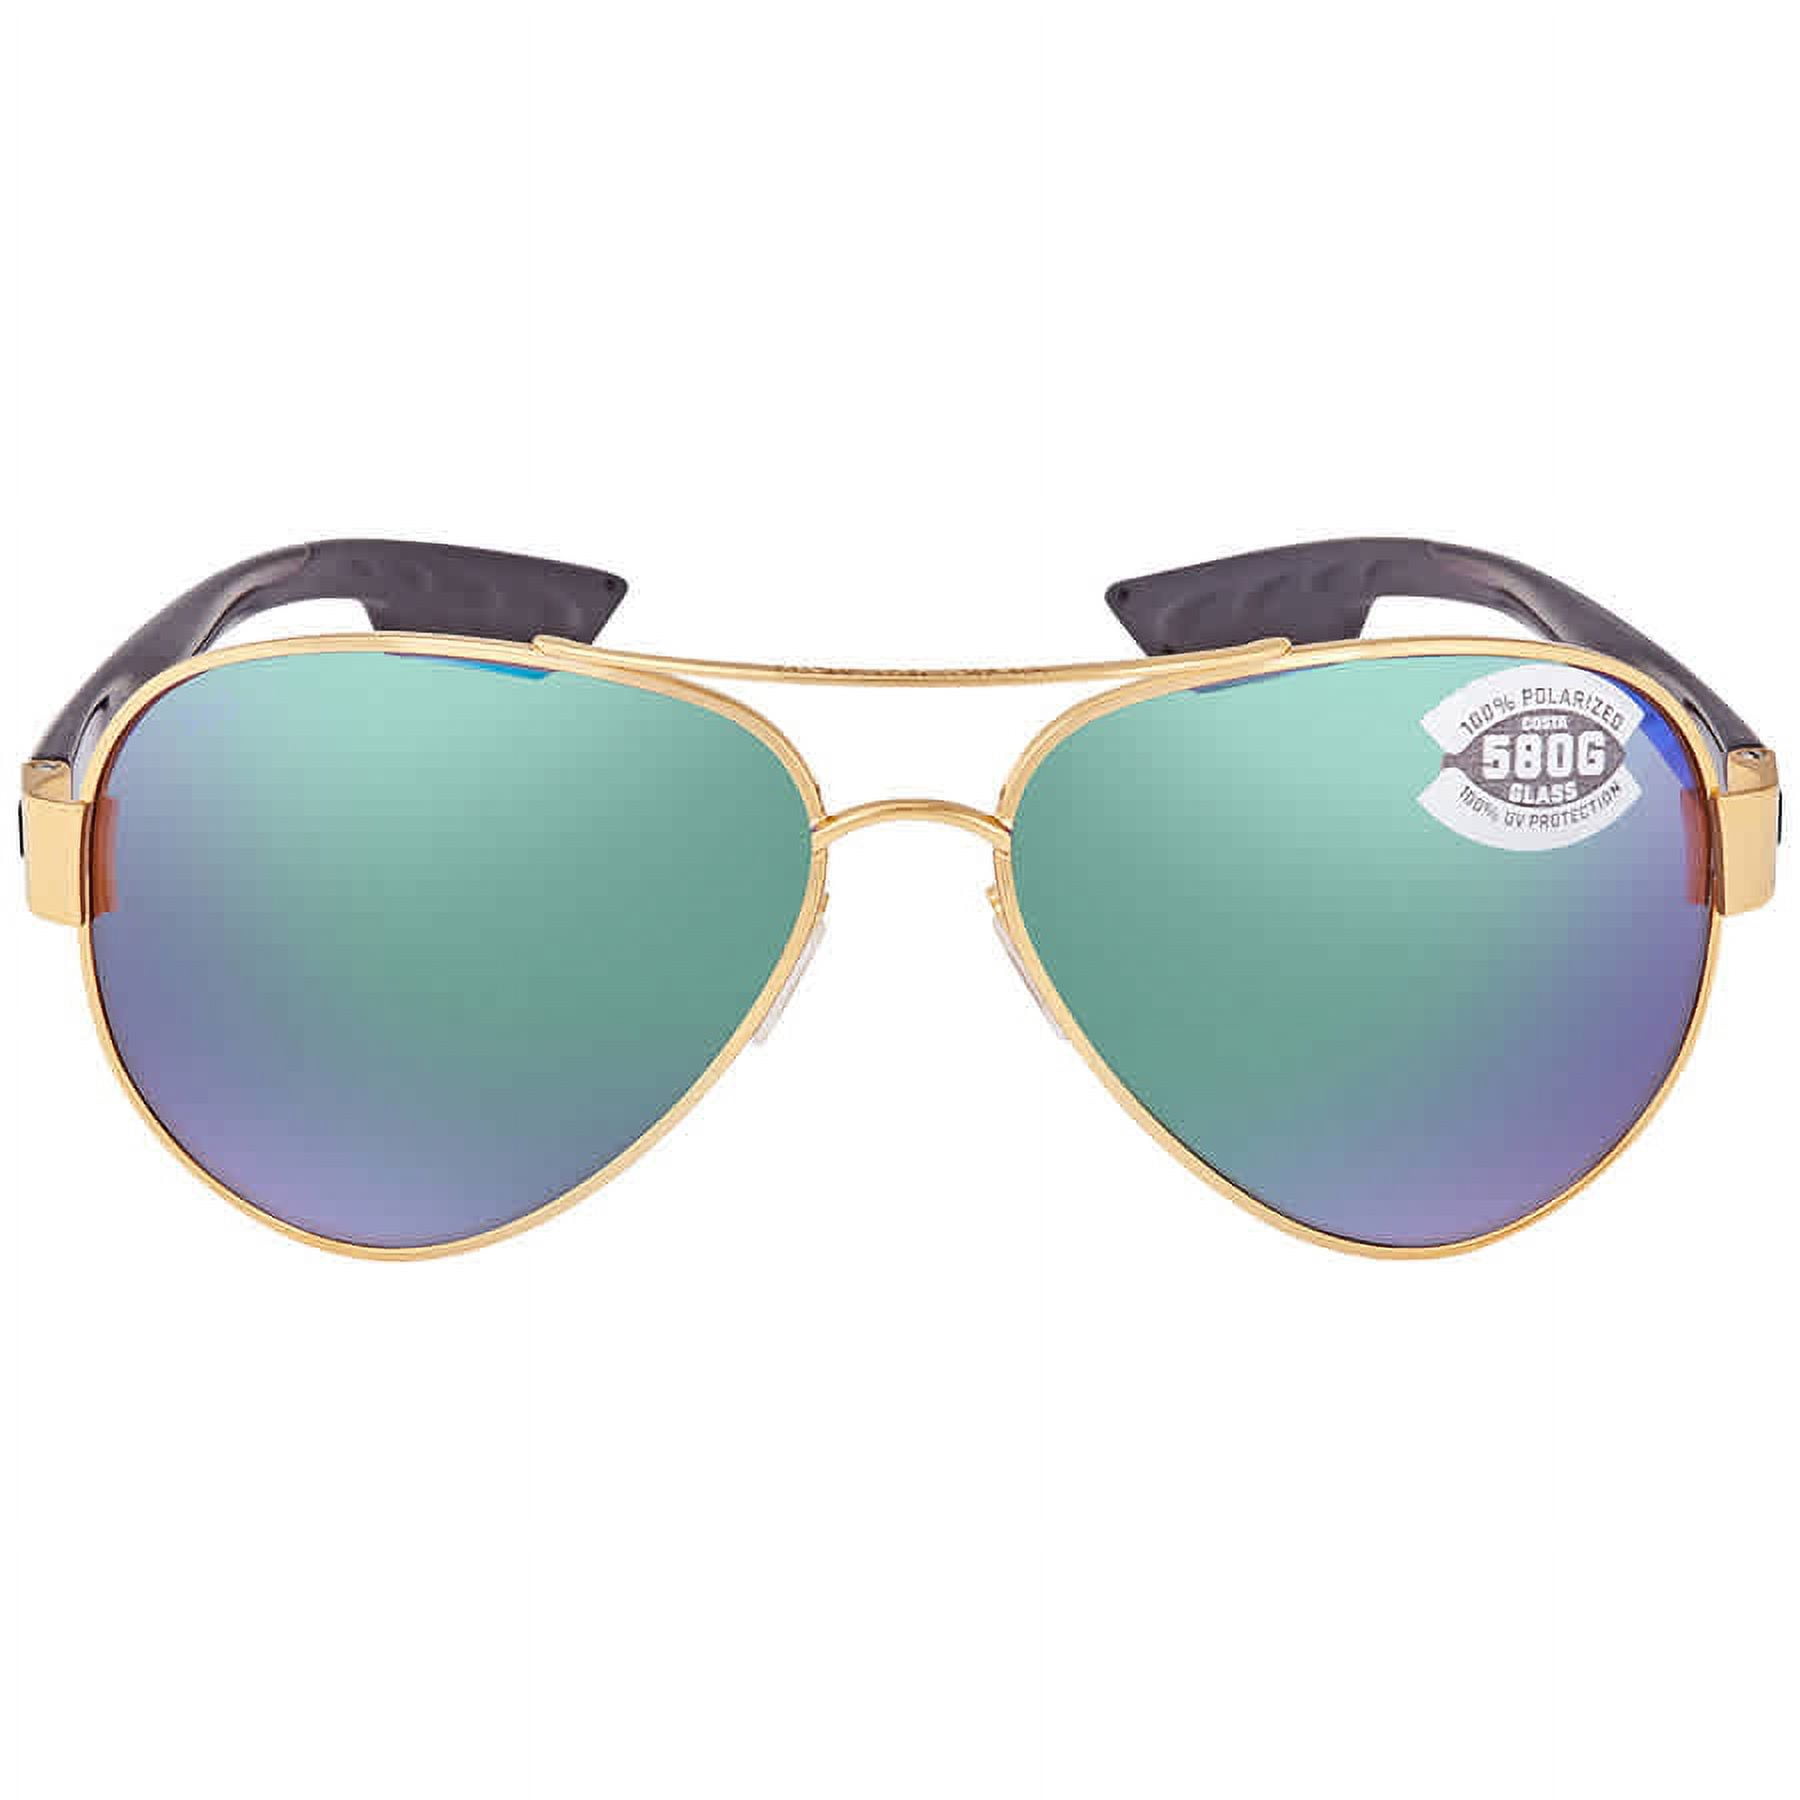 Costa Del Mar South Point Gunmetal Crystal Temples Sunglasses Blue Lens 580G